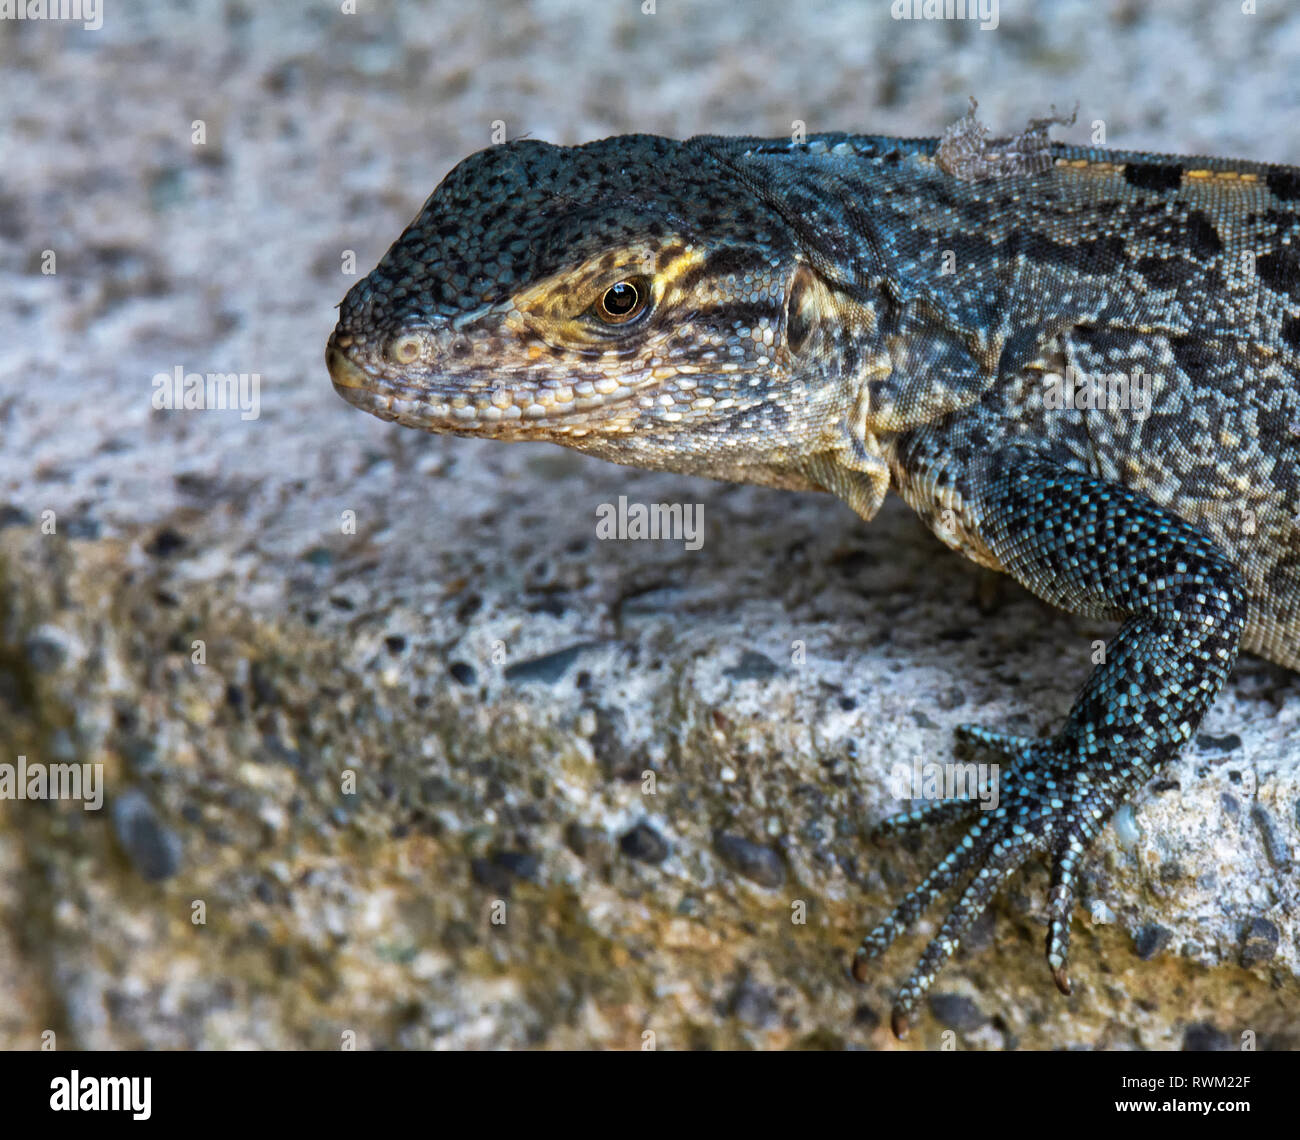 Iguana nero sulla superficie sassosa Foto Stock